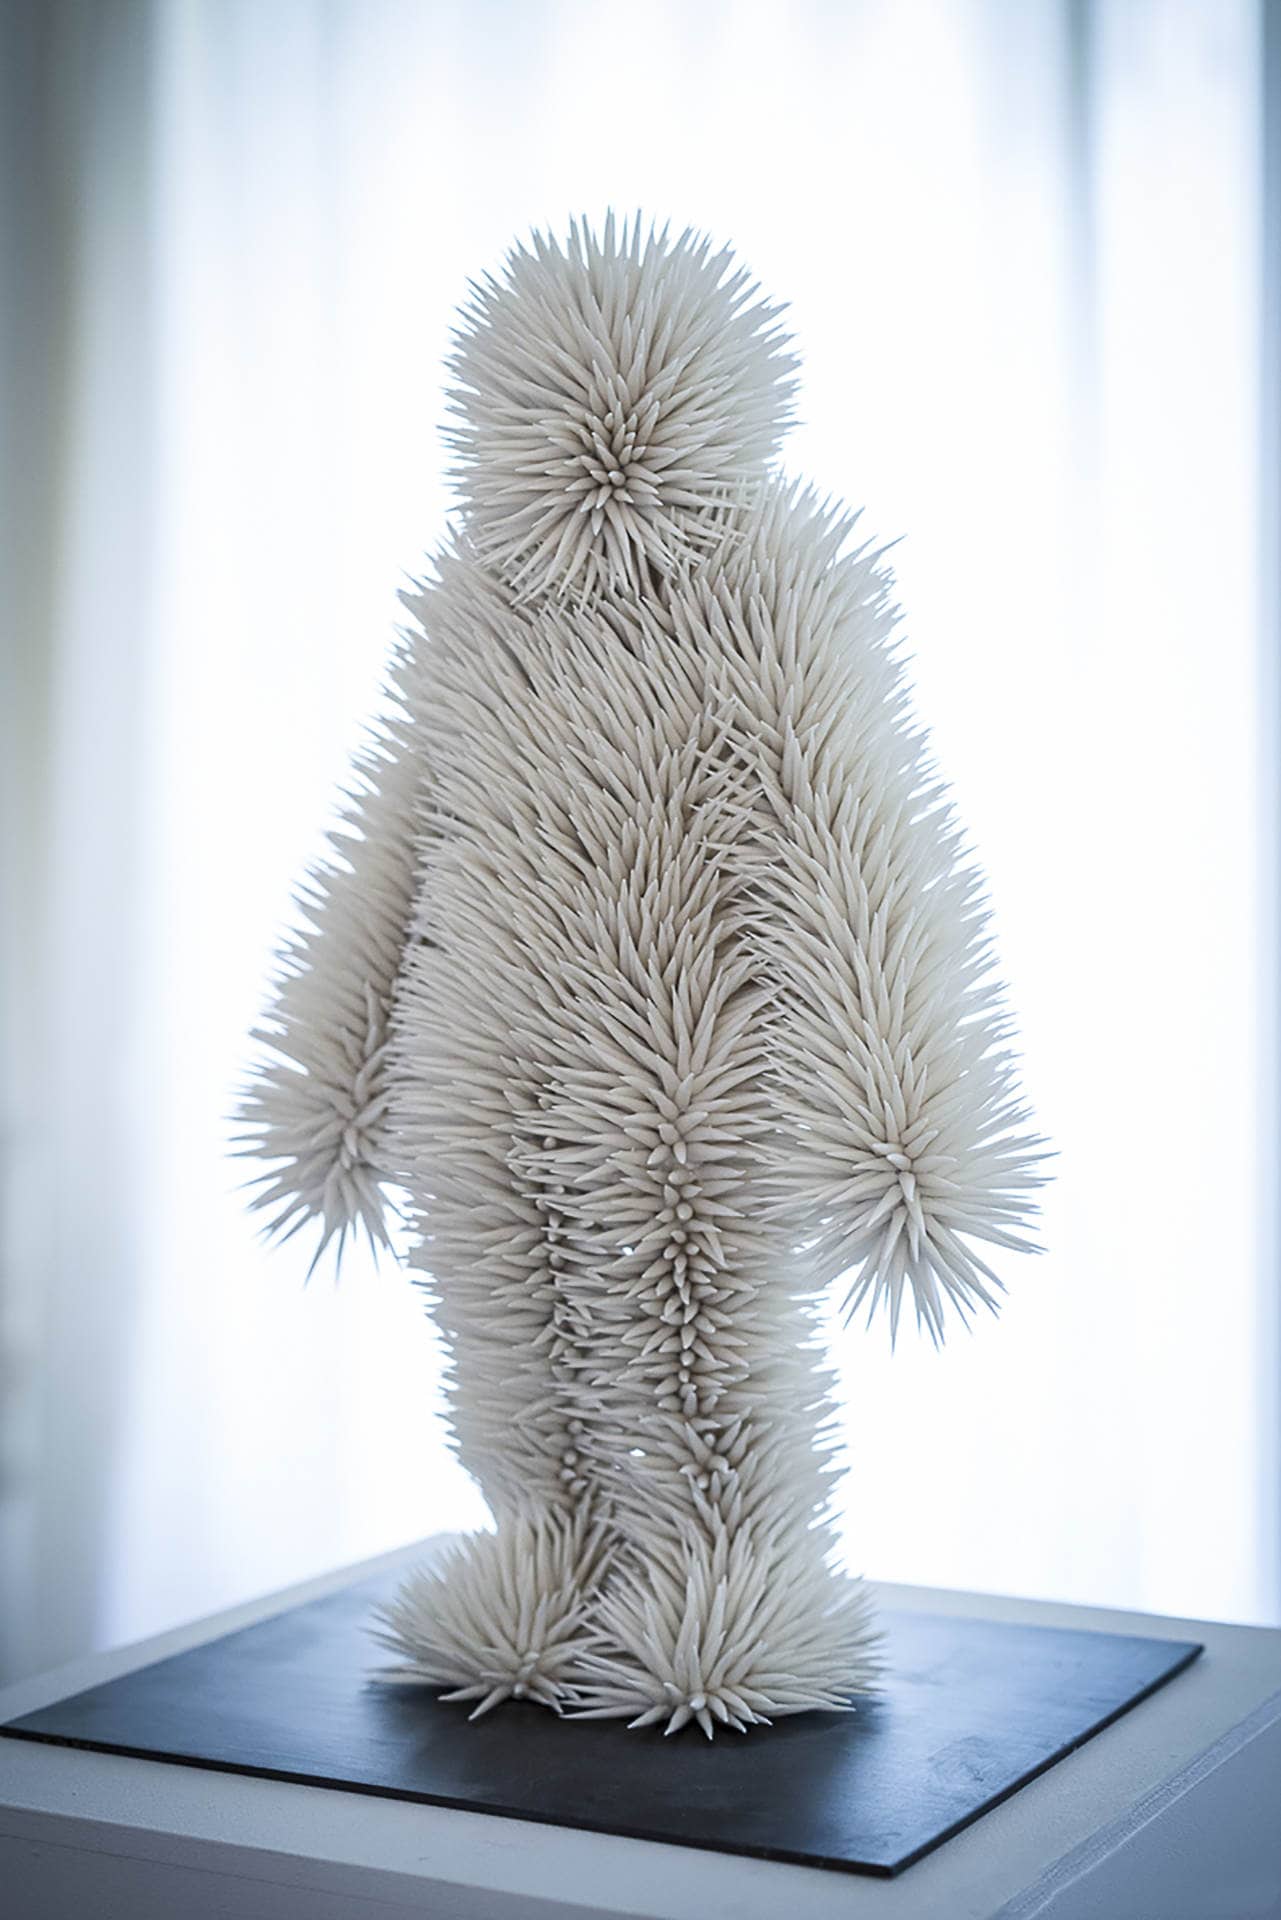 Samuel Yal, Impression/Homme debout, 45x20x15 cm, 2015